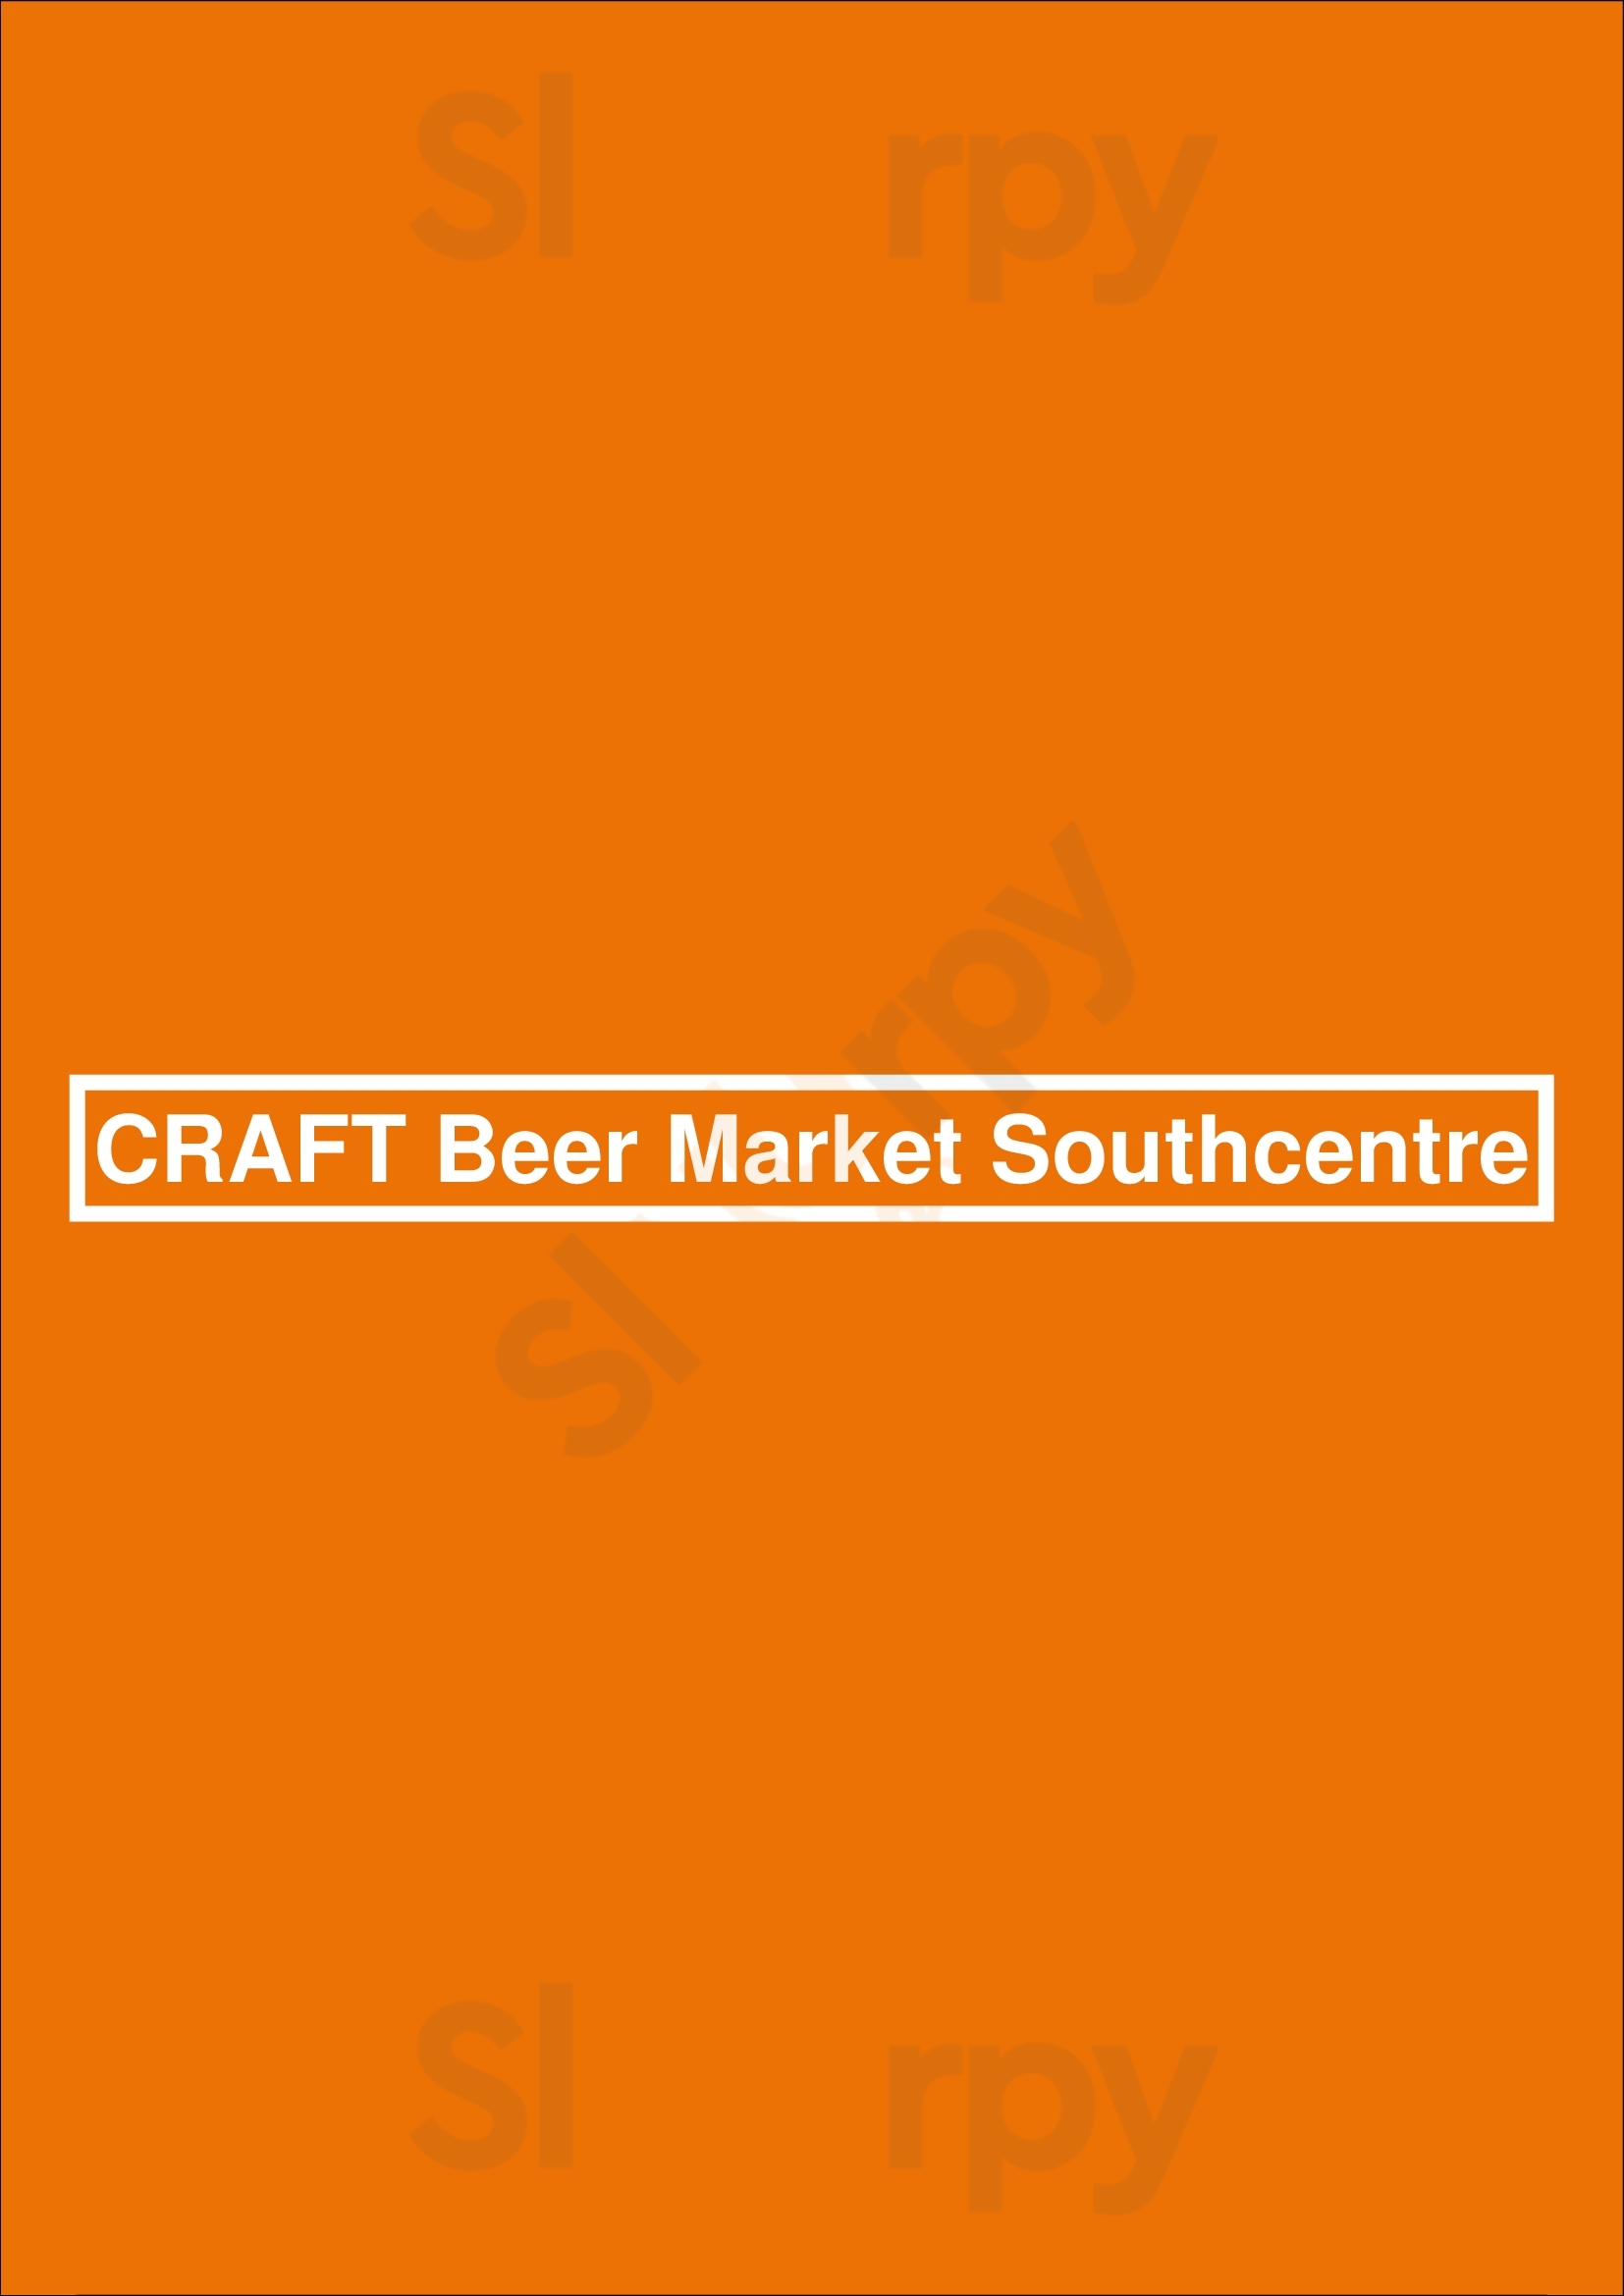 Craft Beer Market Southcentre Calgary Menu - 1